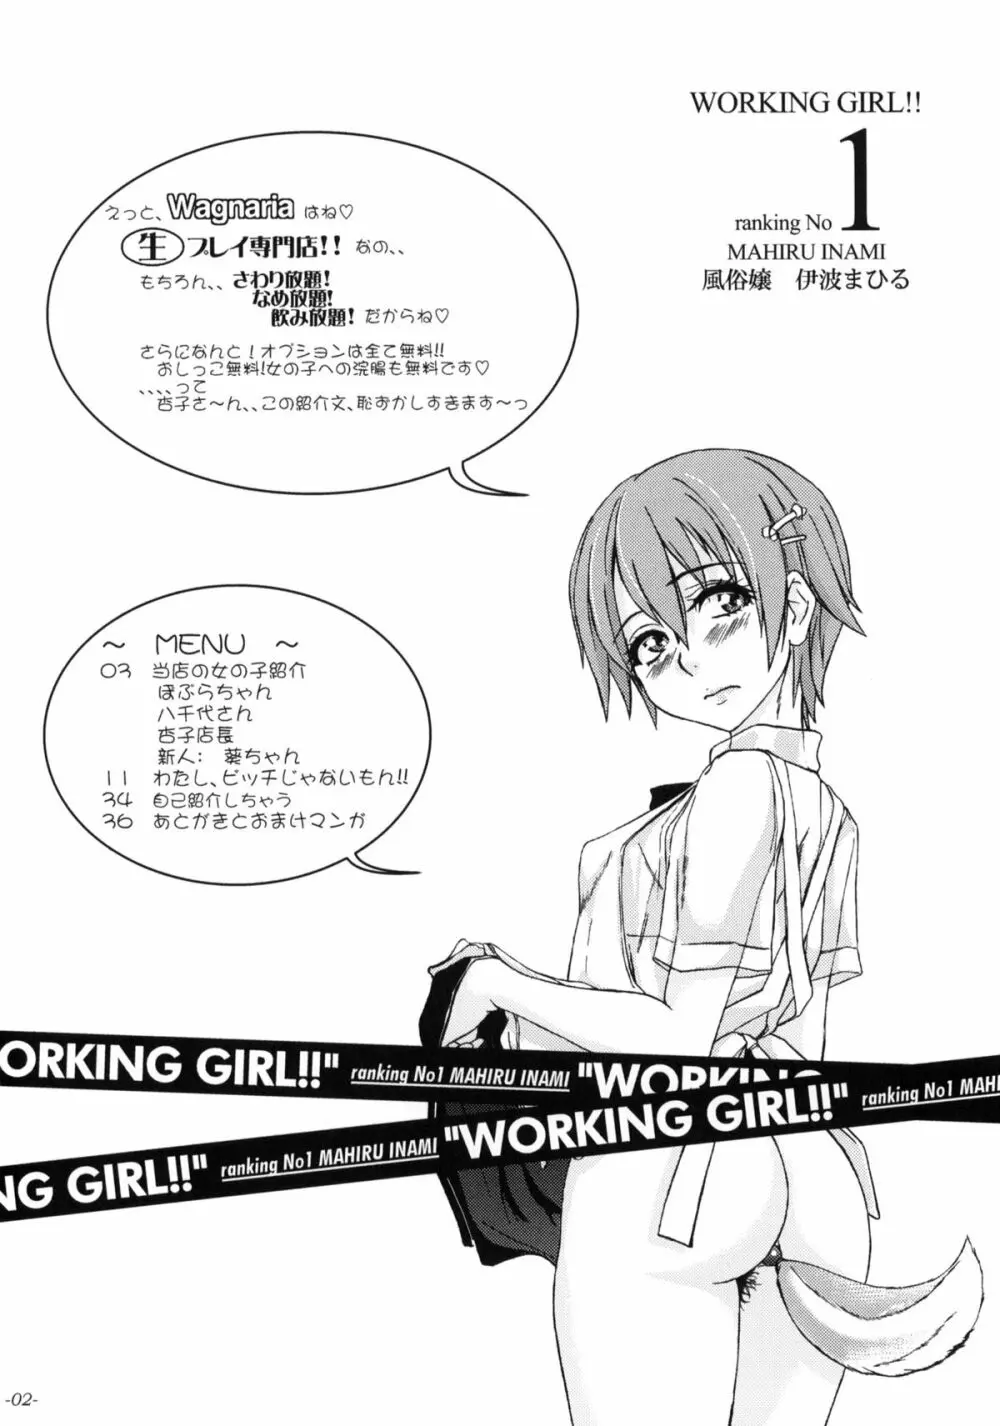 WORKING GIRL!! ranking No 1 風俗嬢 伊波まひる 3ページ